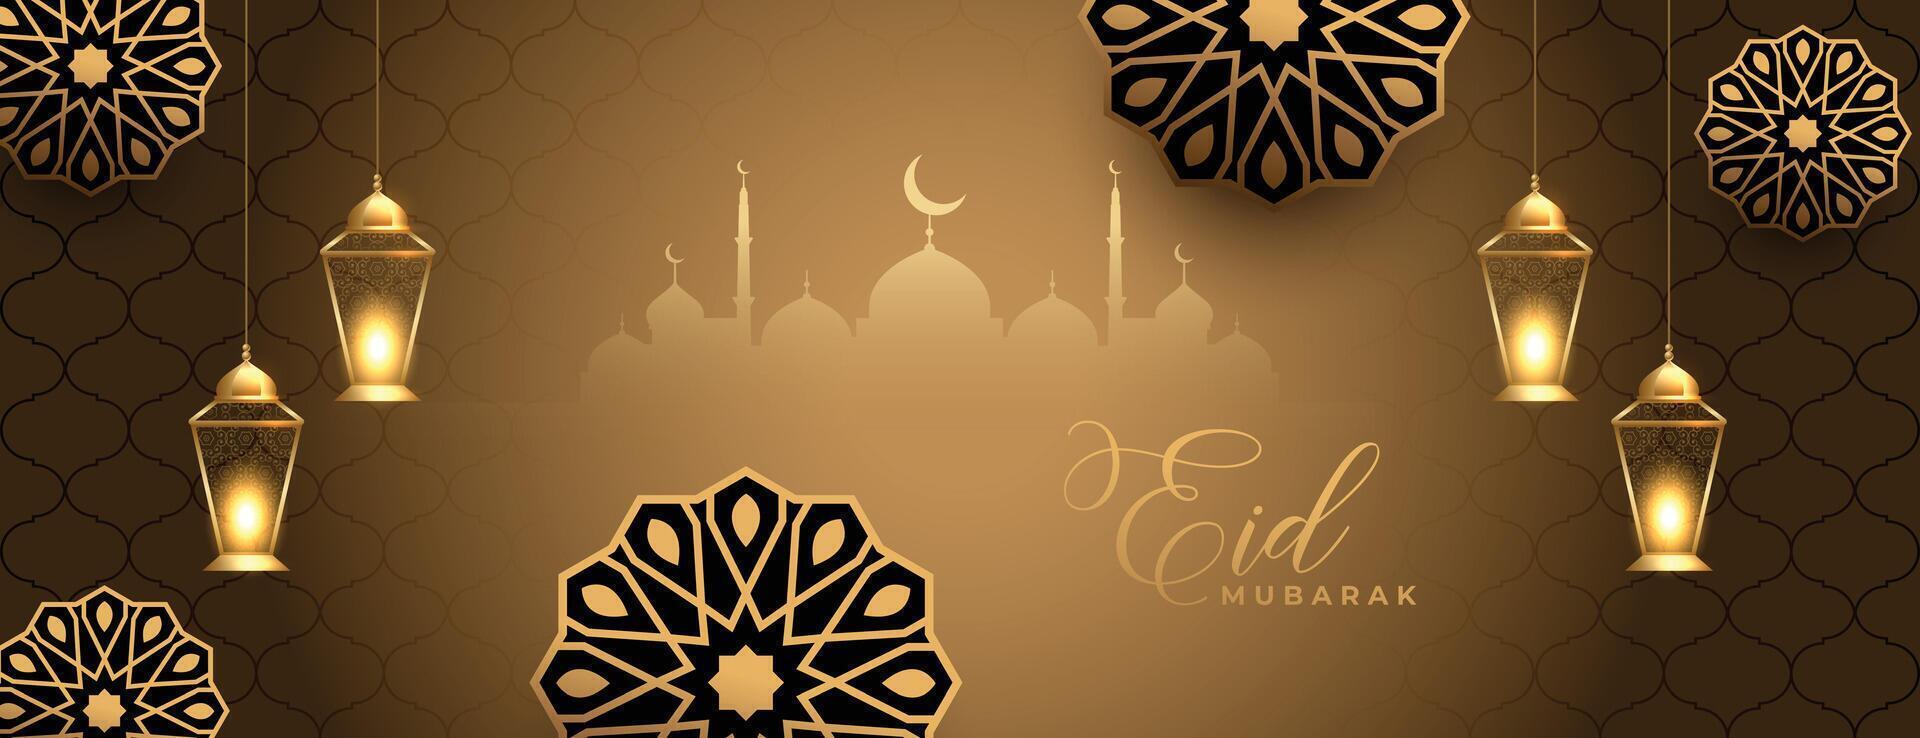 beautiful eid mubarak decorative realistic banner vector illustration